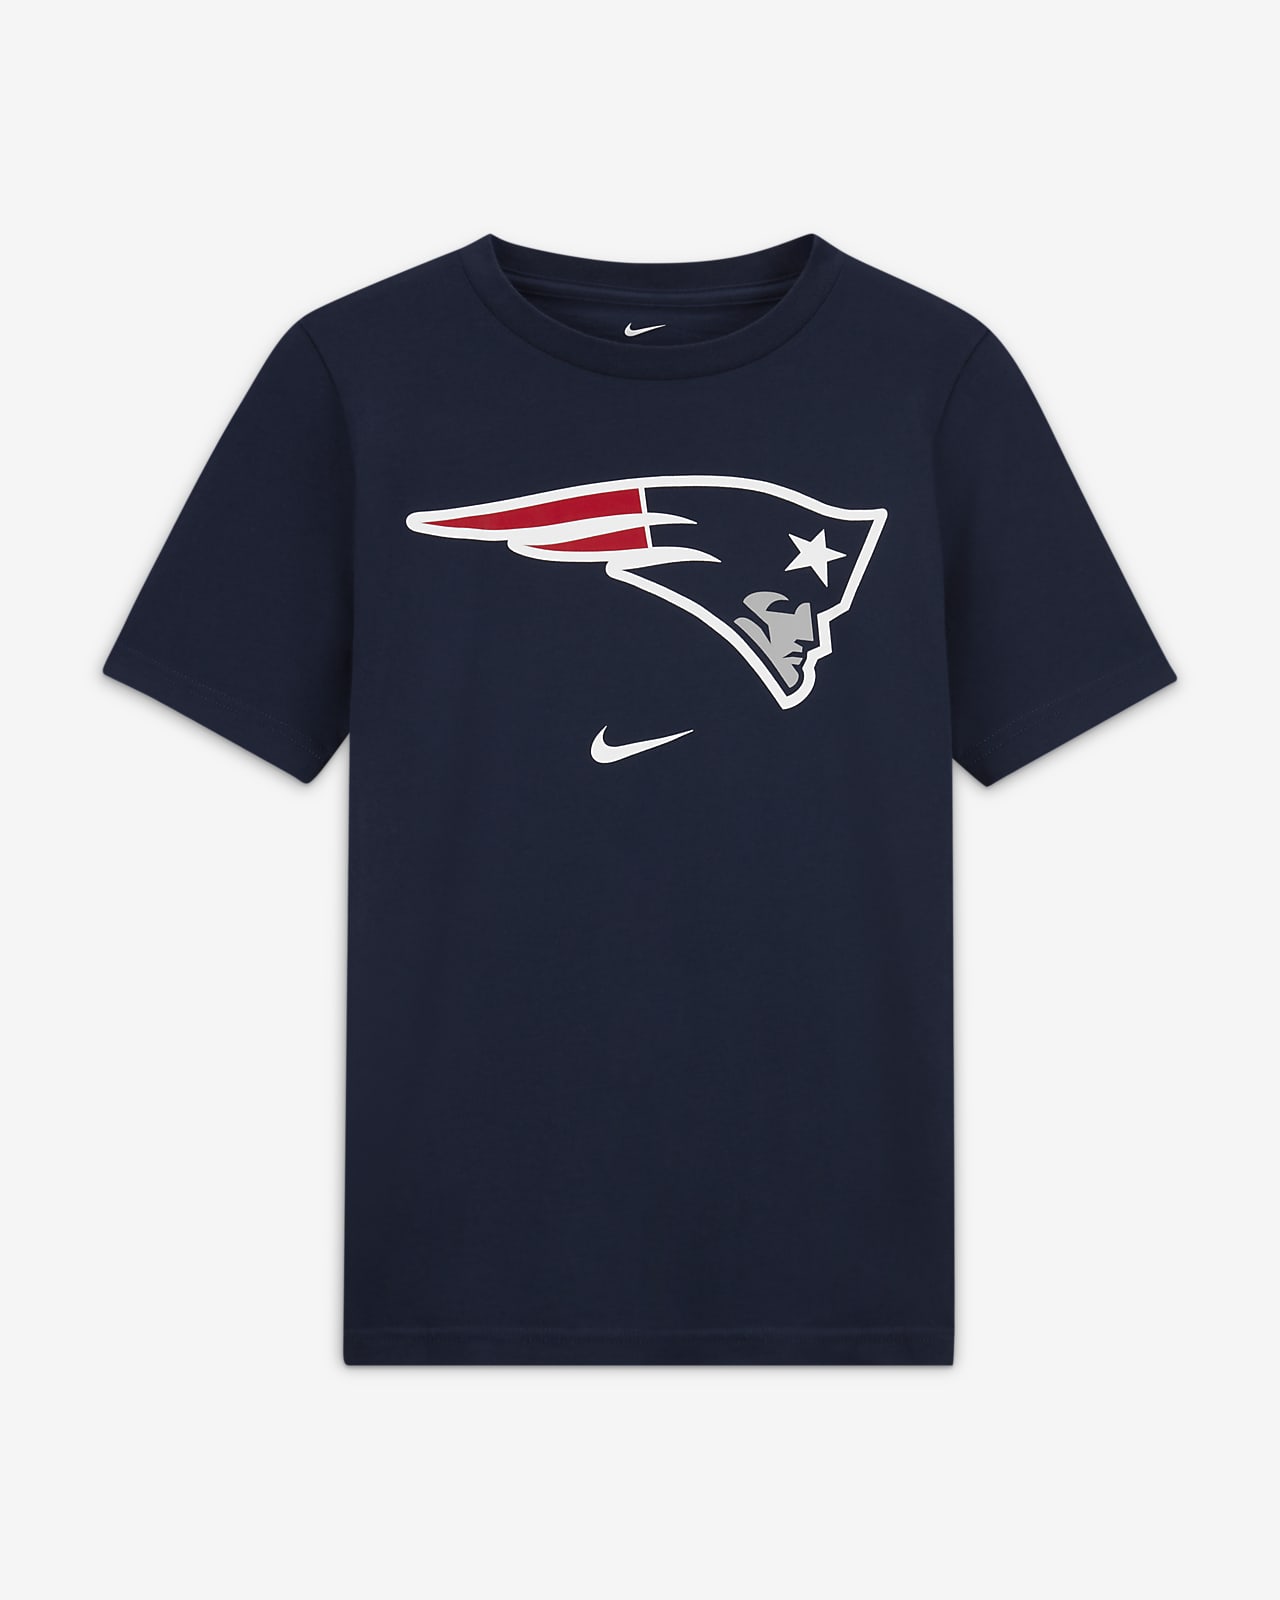 hans At regere feudale Nike (NFL New England Patriots) Older Kids' T-Shirt. Nike DK